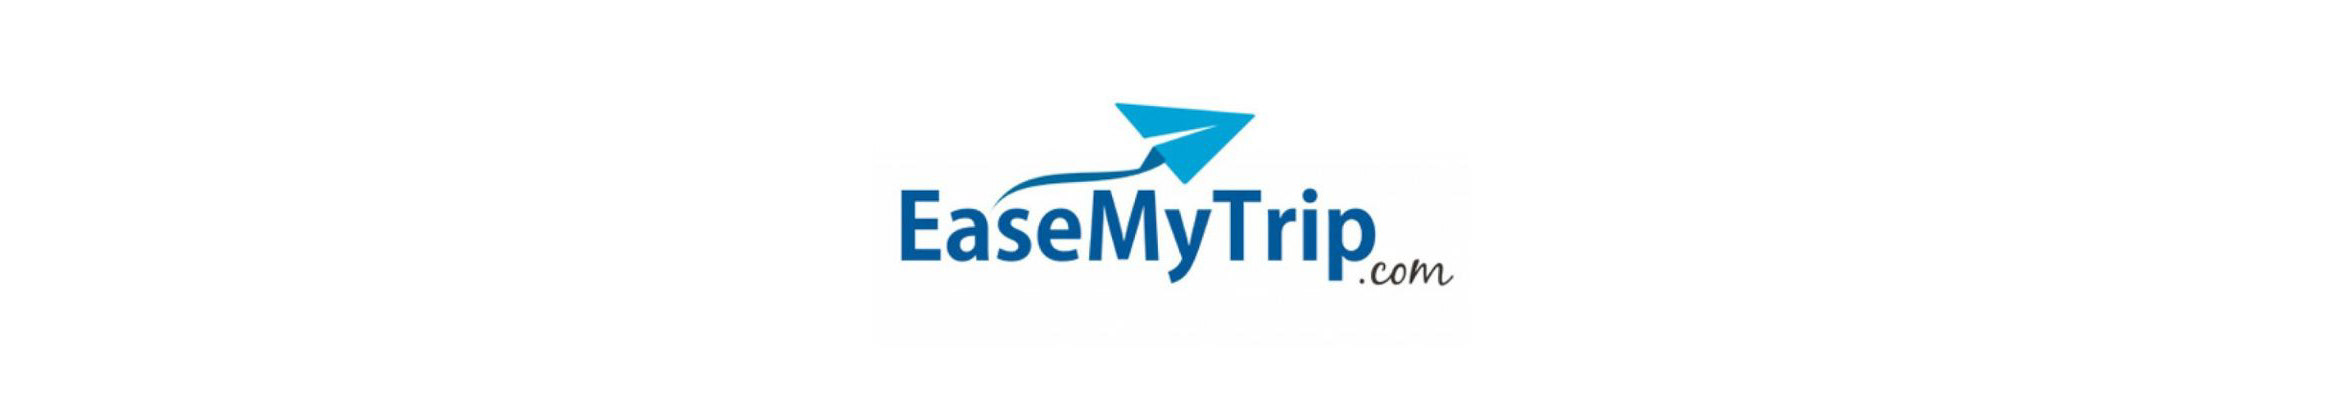 EaseMy Trip's profile banner